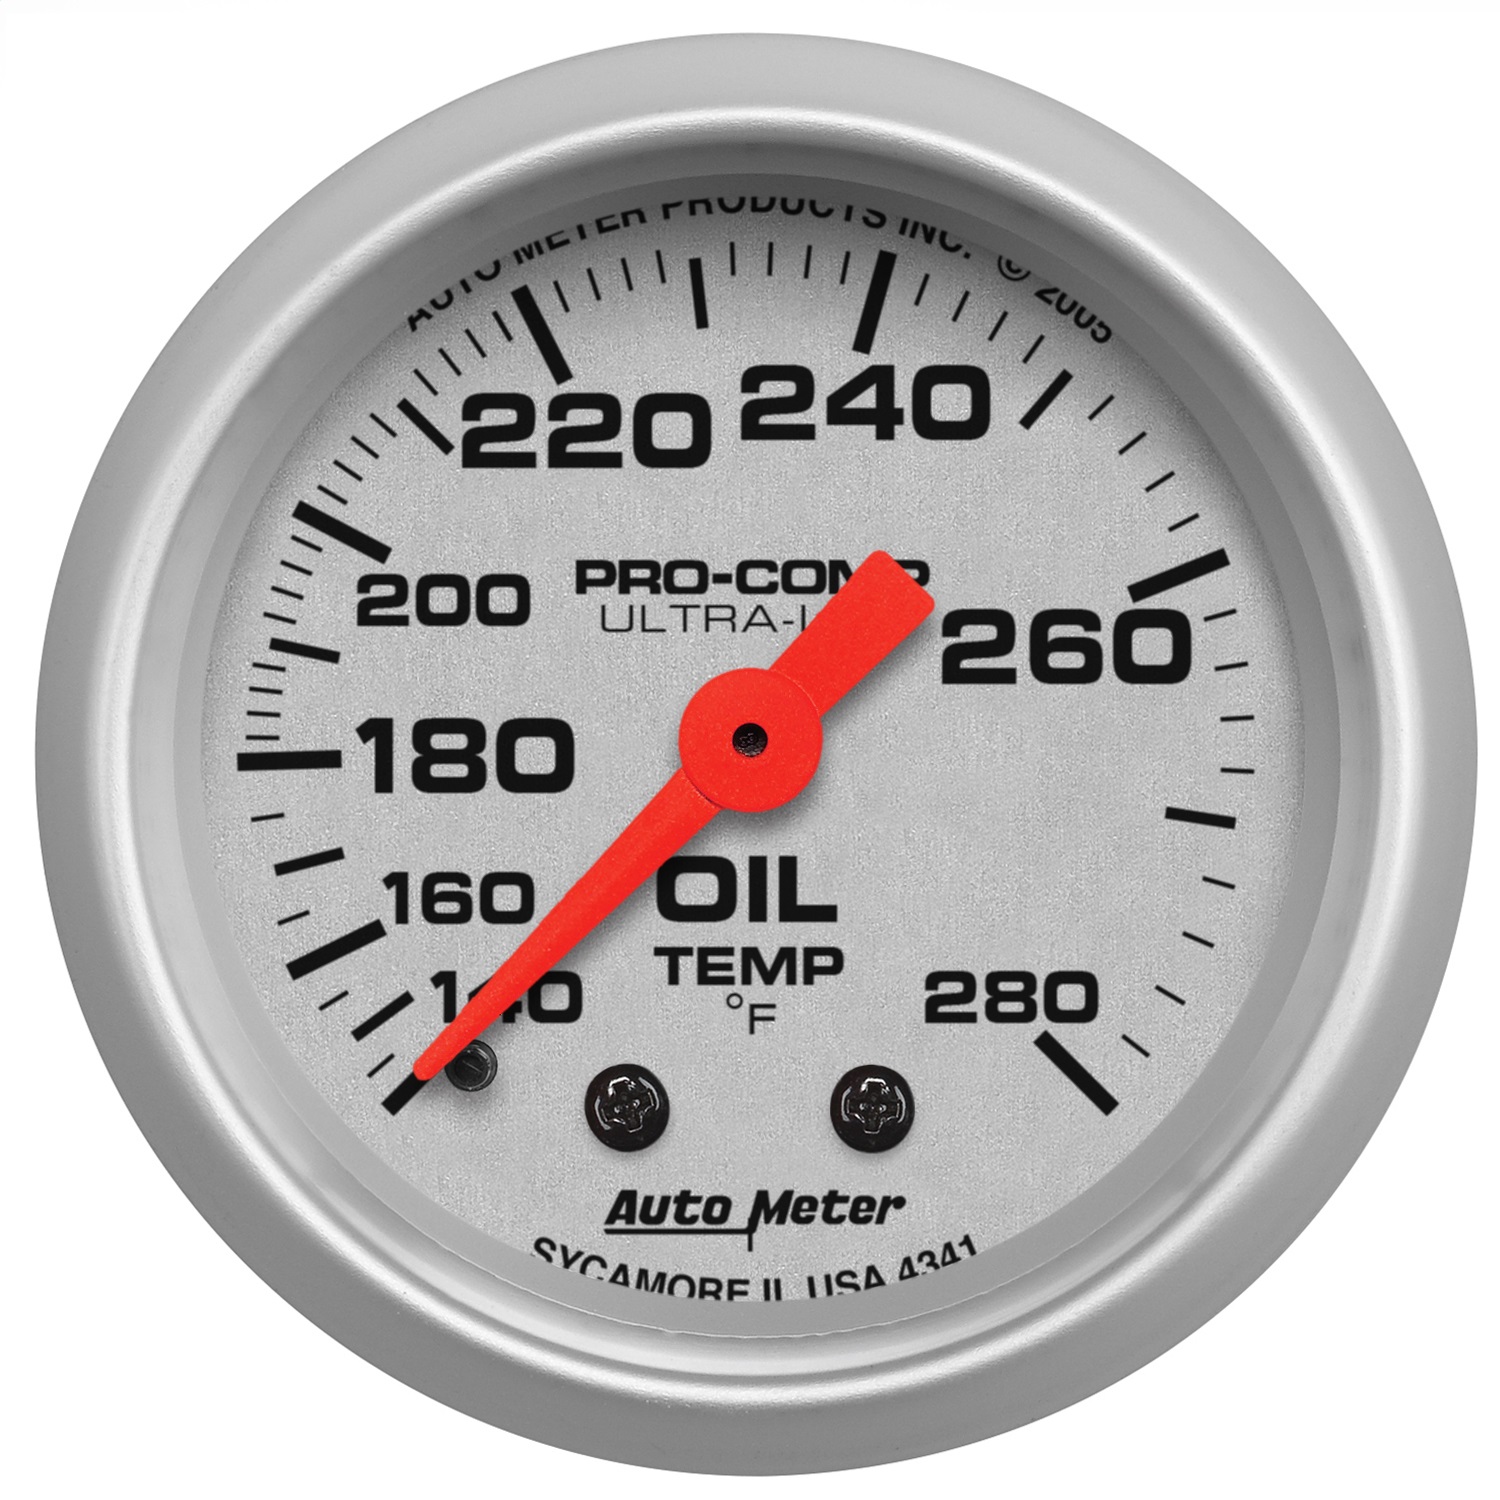 Auto Meter Auto Meter 4341 Ultra-Lite; Mechanical Oil Temperature Gauge